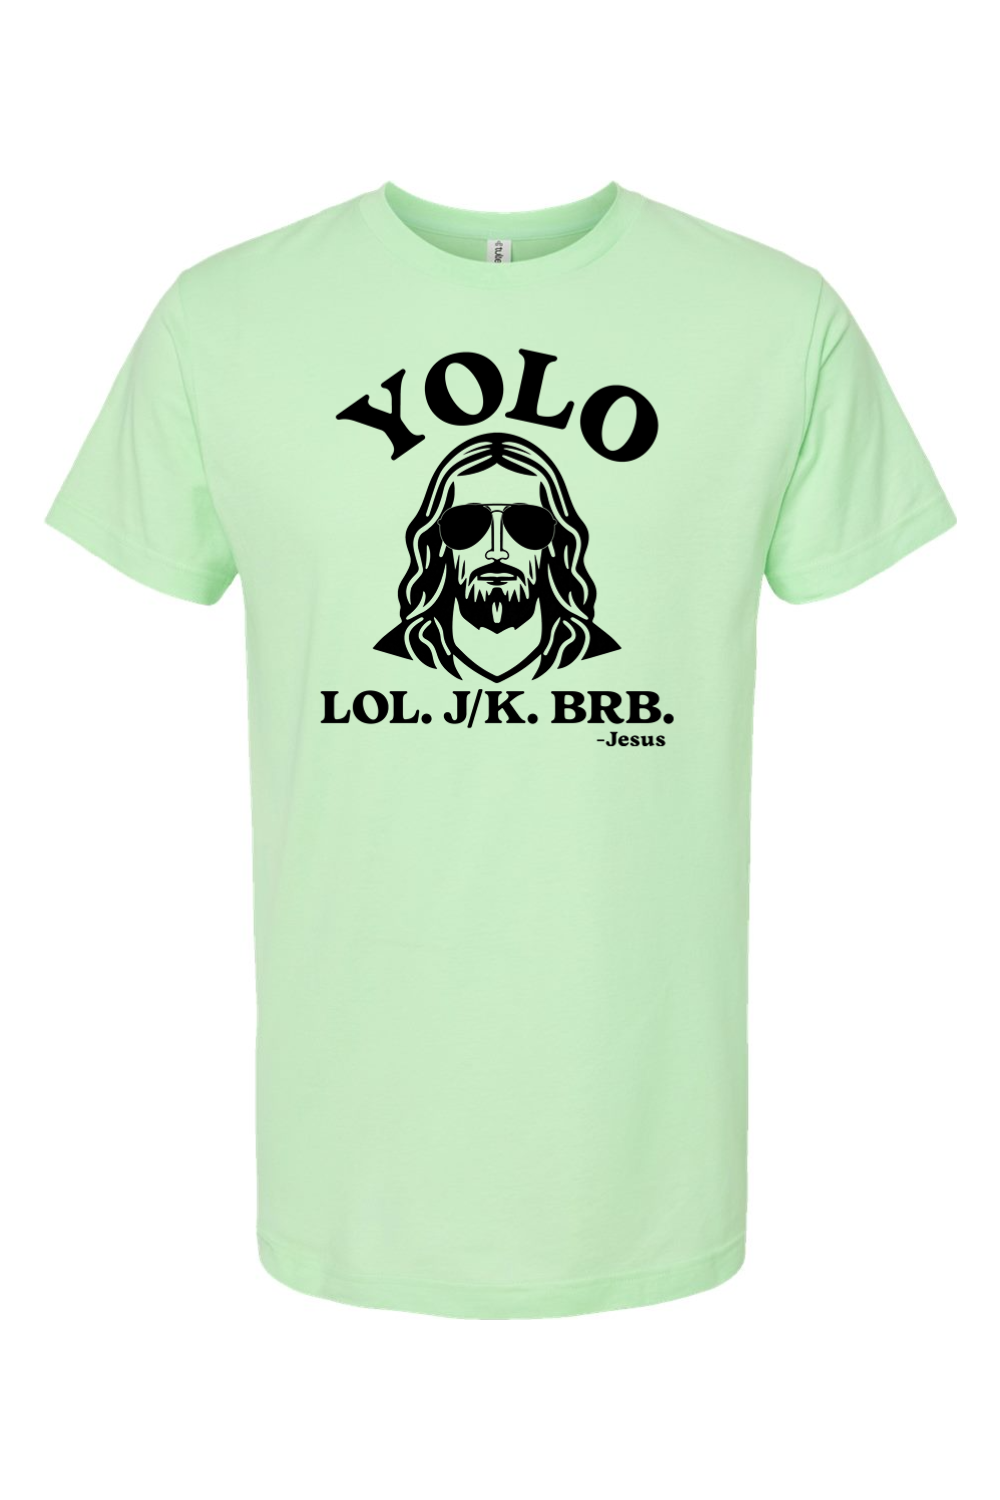 YOLO. LOL. J/K. BRB. - T-Shirt